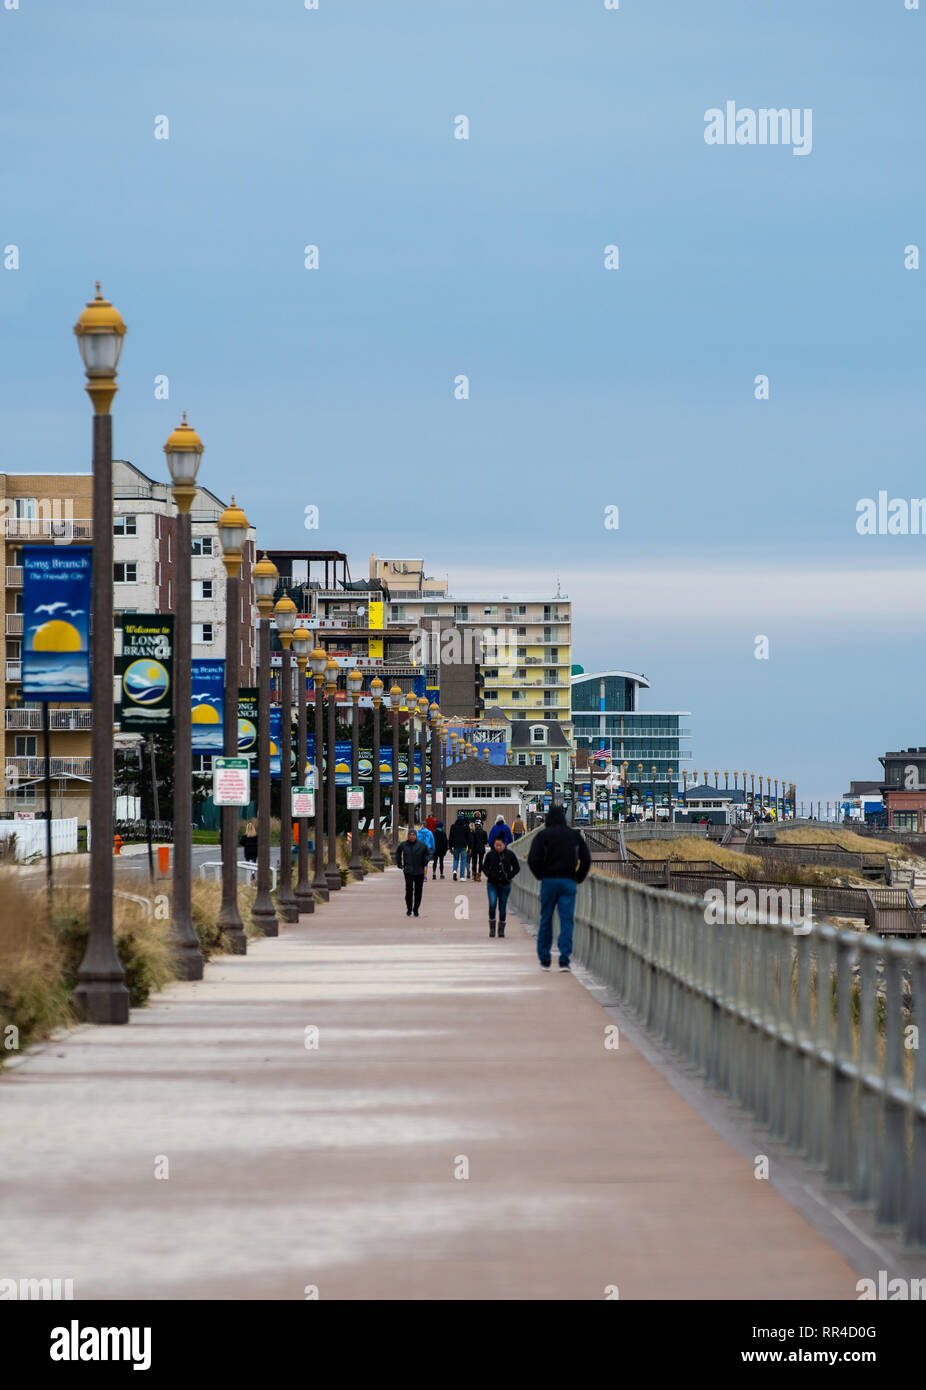 Long Branch, United States - November 18 2018: Pedestrians walk along New  Jersey shore on the boardwalk alongside Ocean Avenue Stock Photo - Alamy